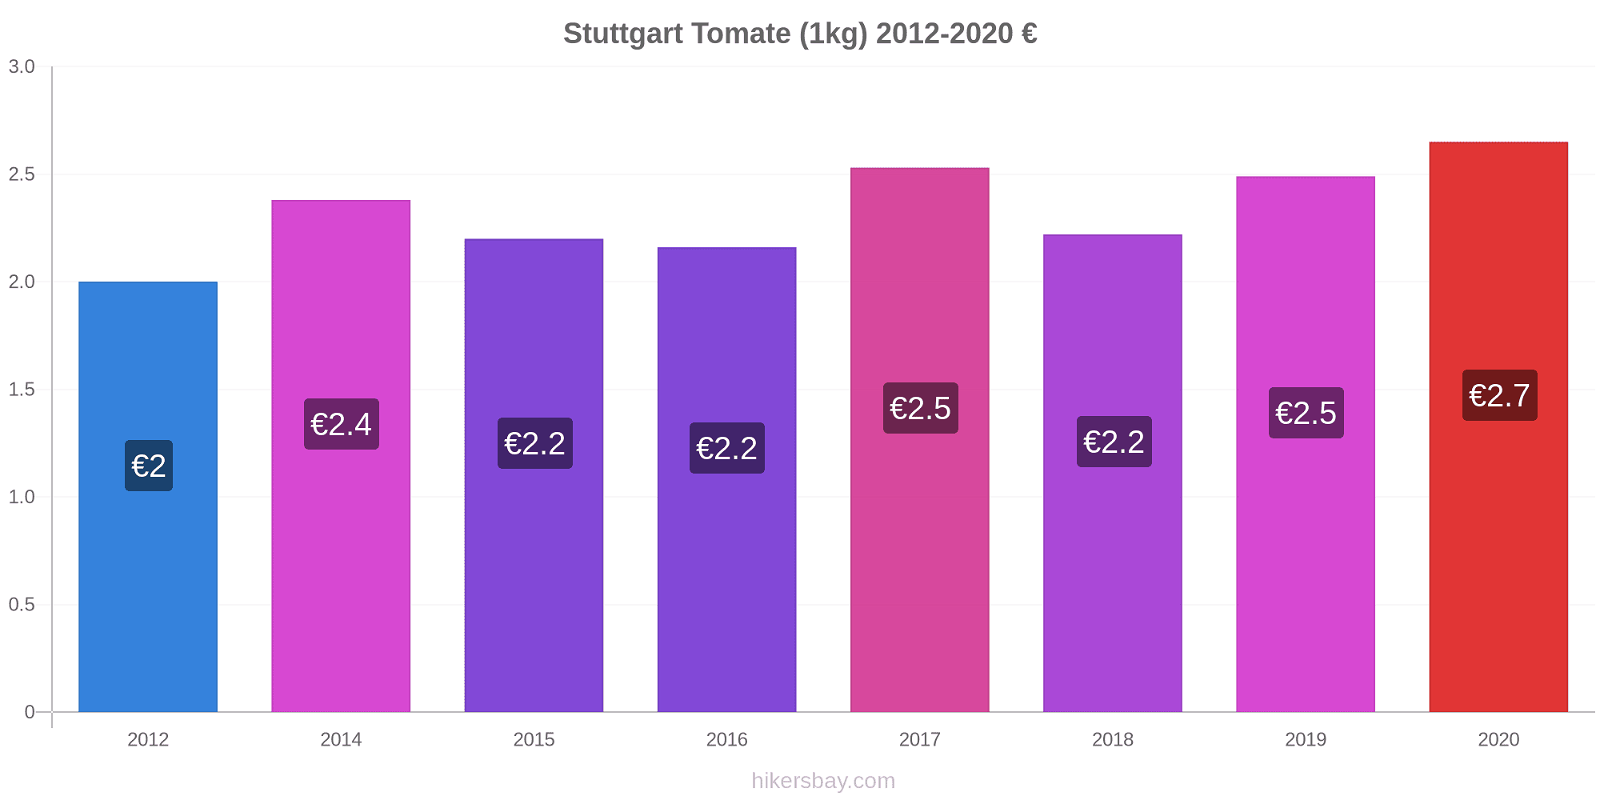 Stuttgart cambios de precios Tomate (1kg) hikersbay.com